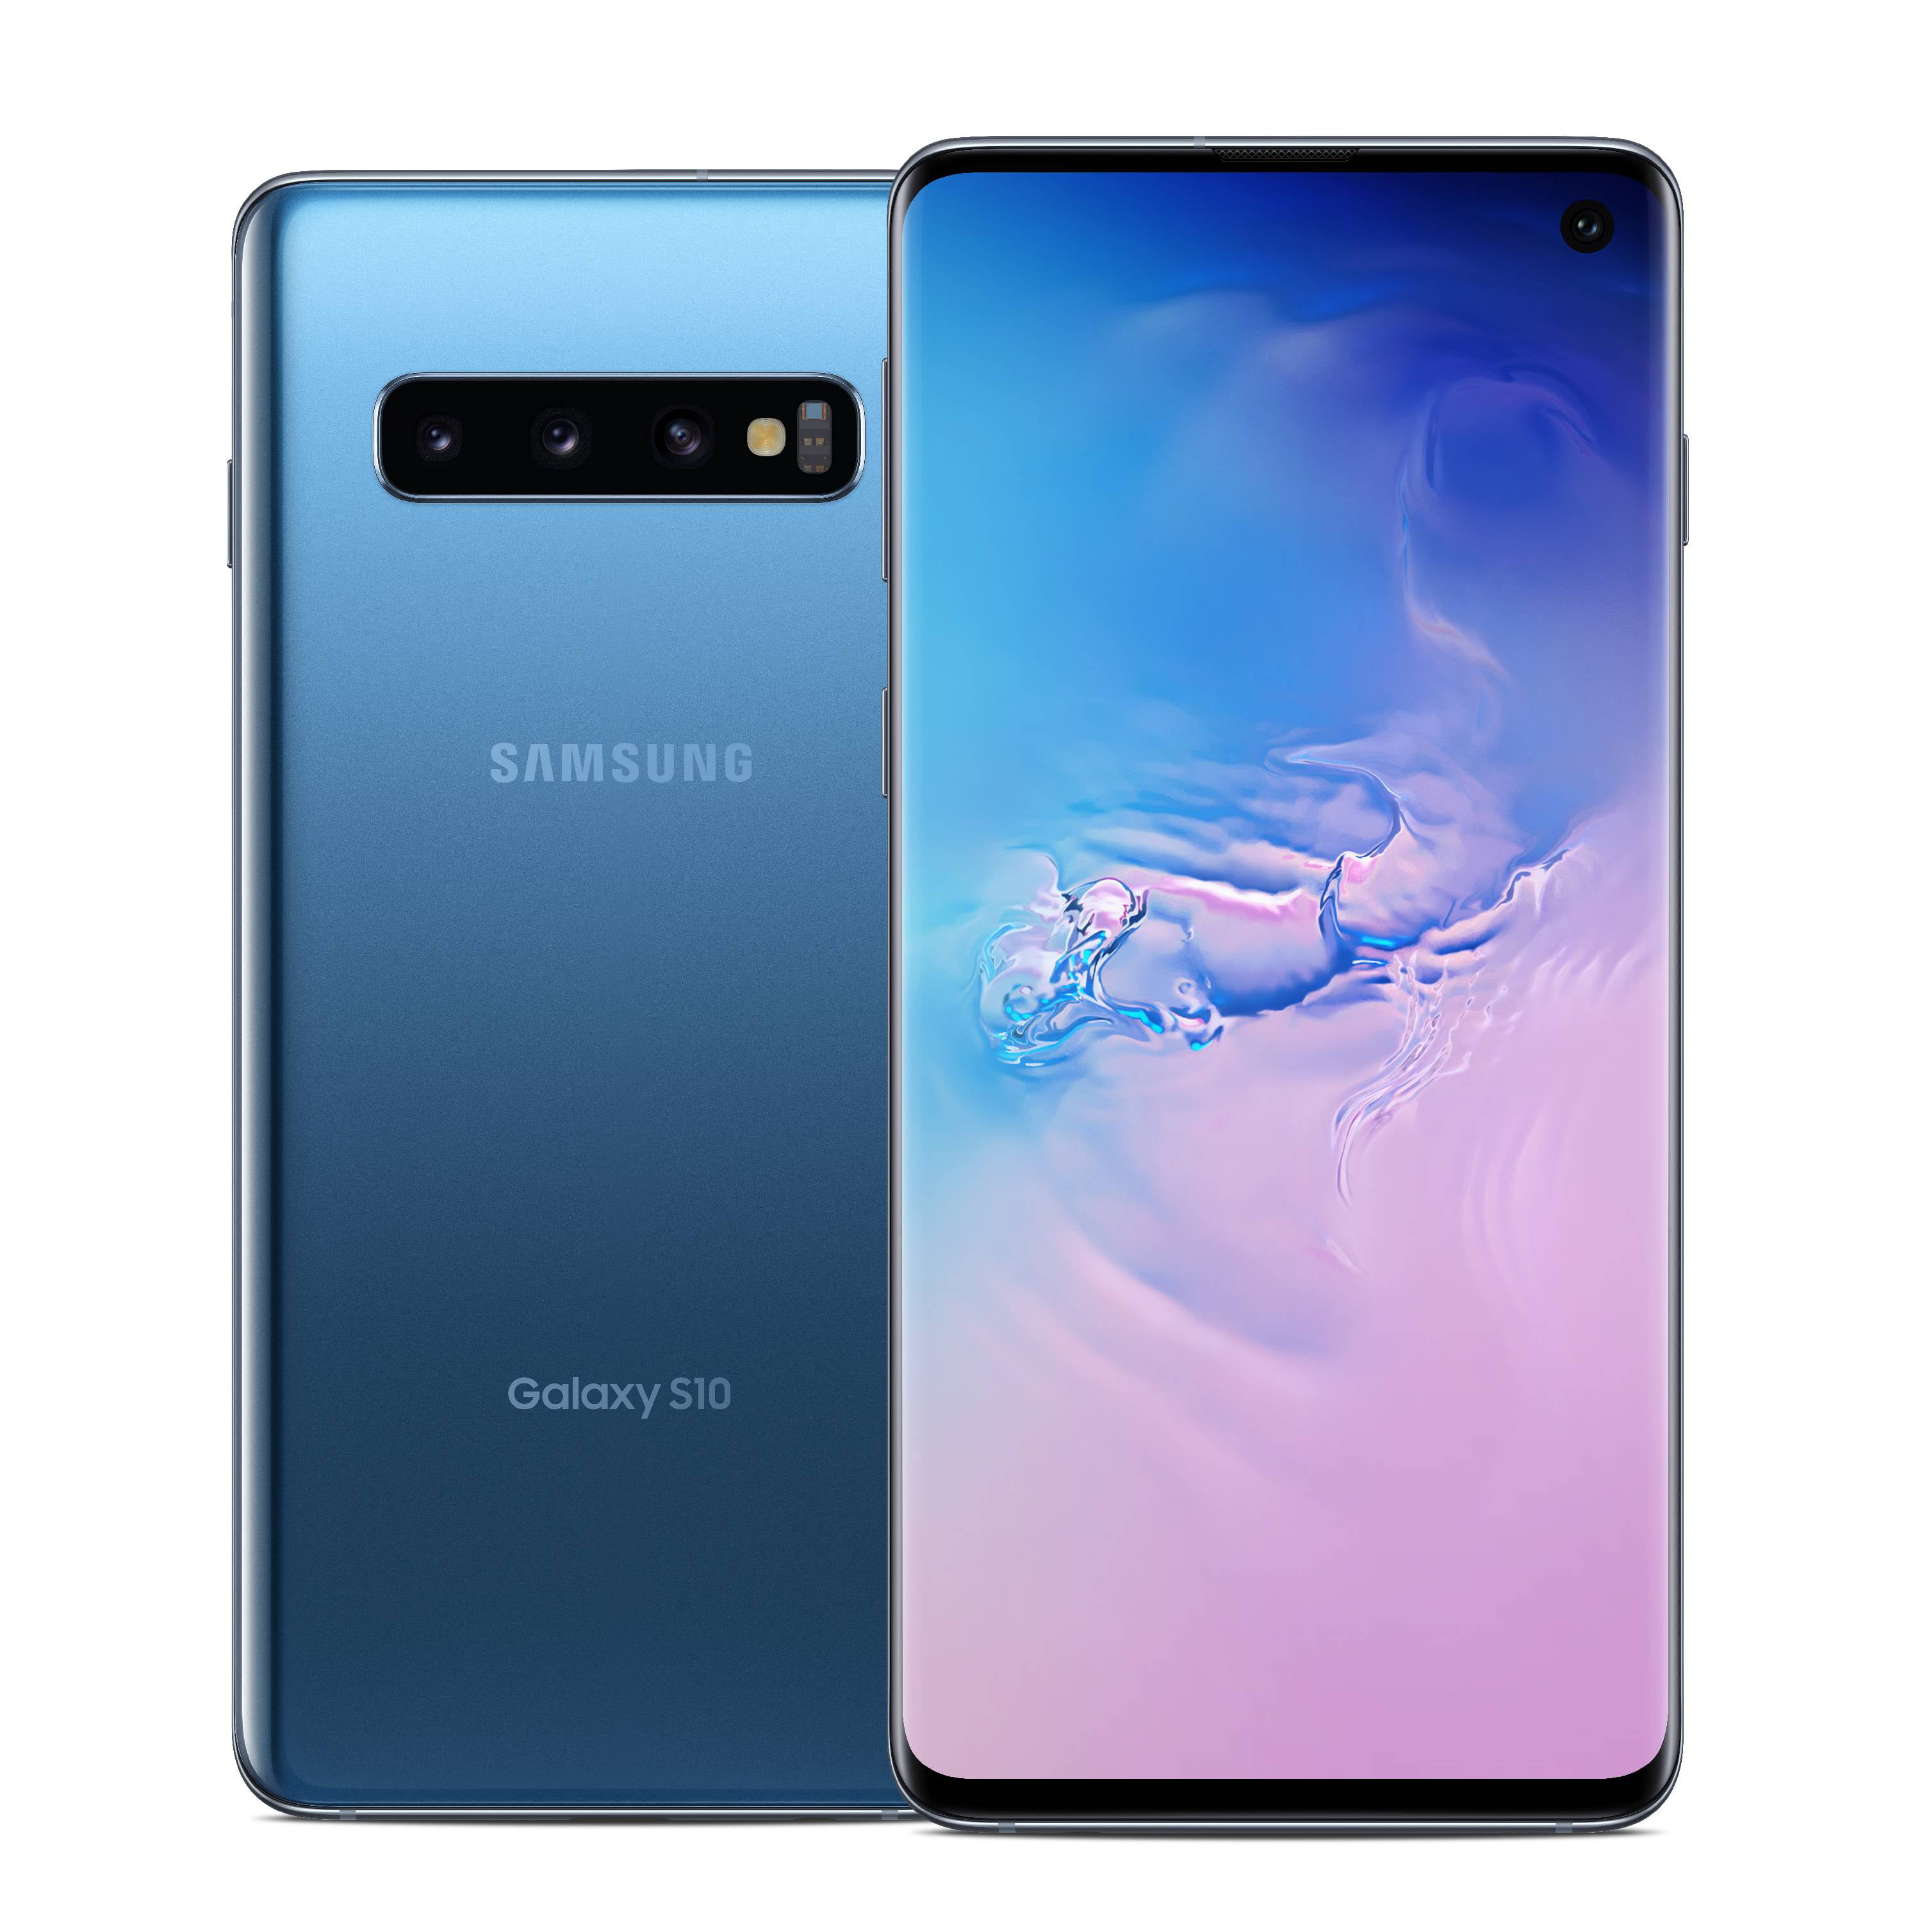 SAMSUNG Unlocked Galaxy S10, 128GB Blue - Smartphone